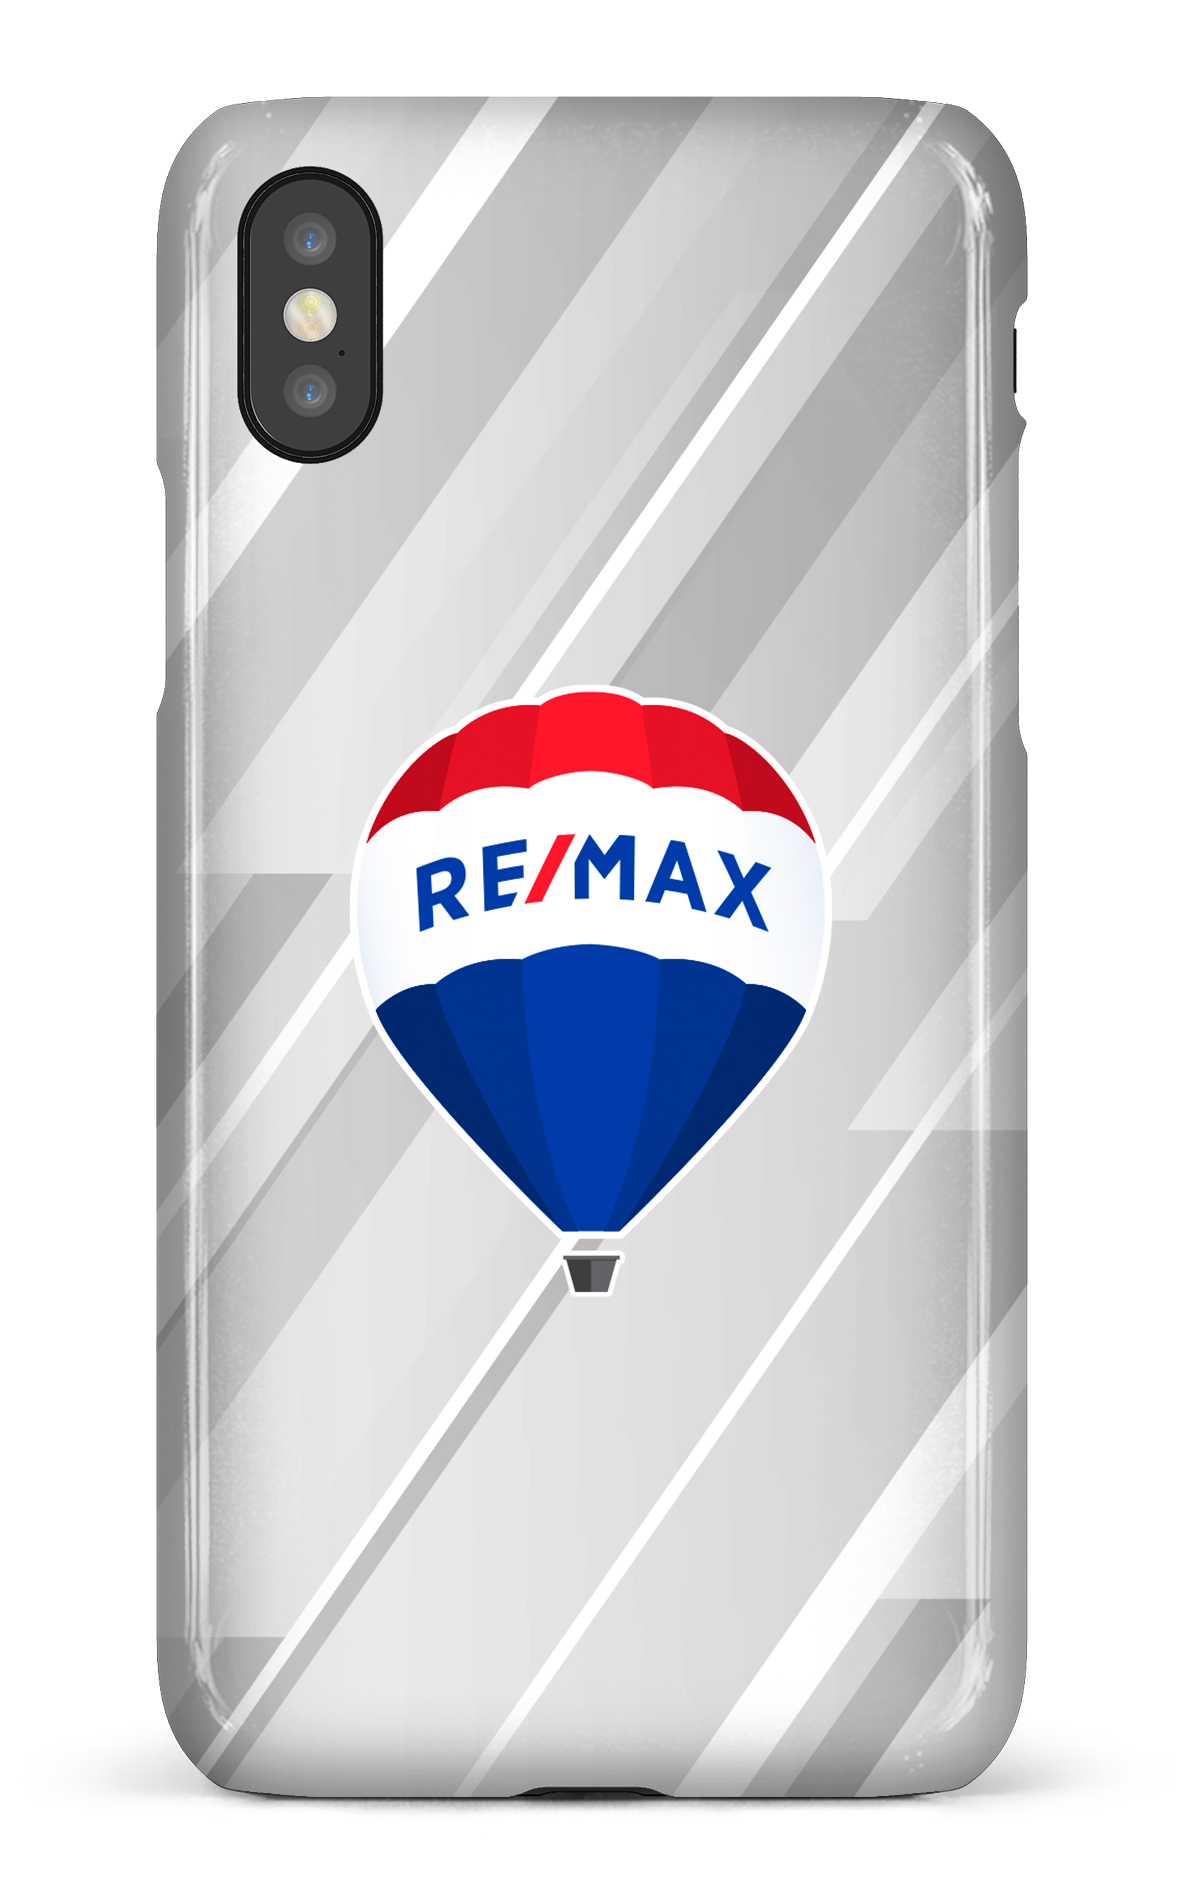 Remax Blanc - iPhone X/Xs